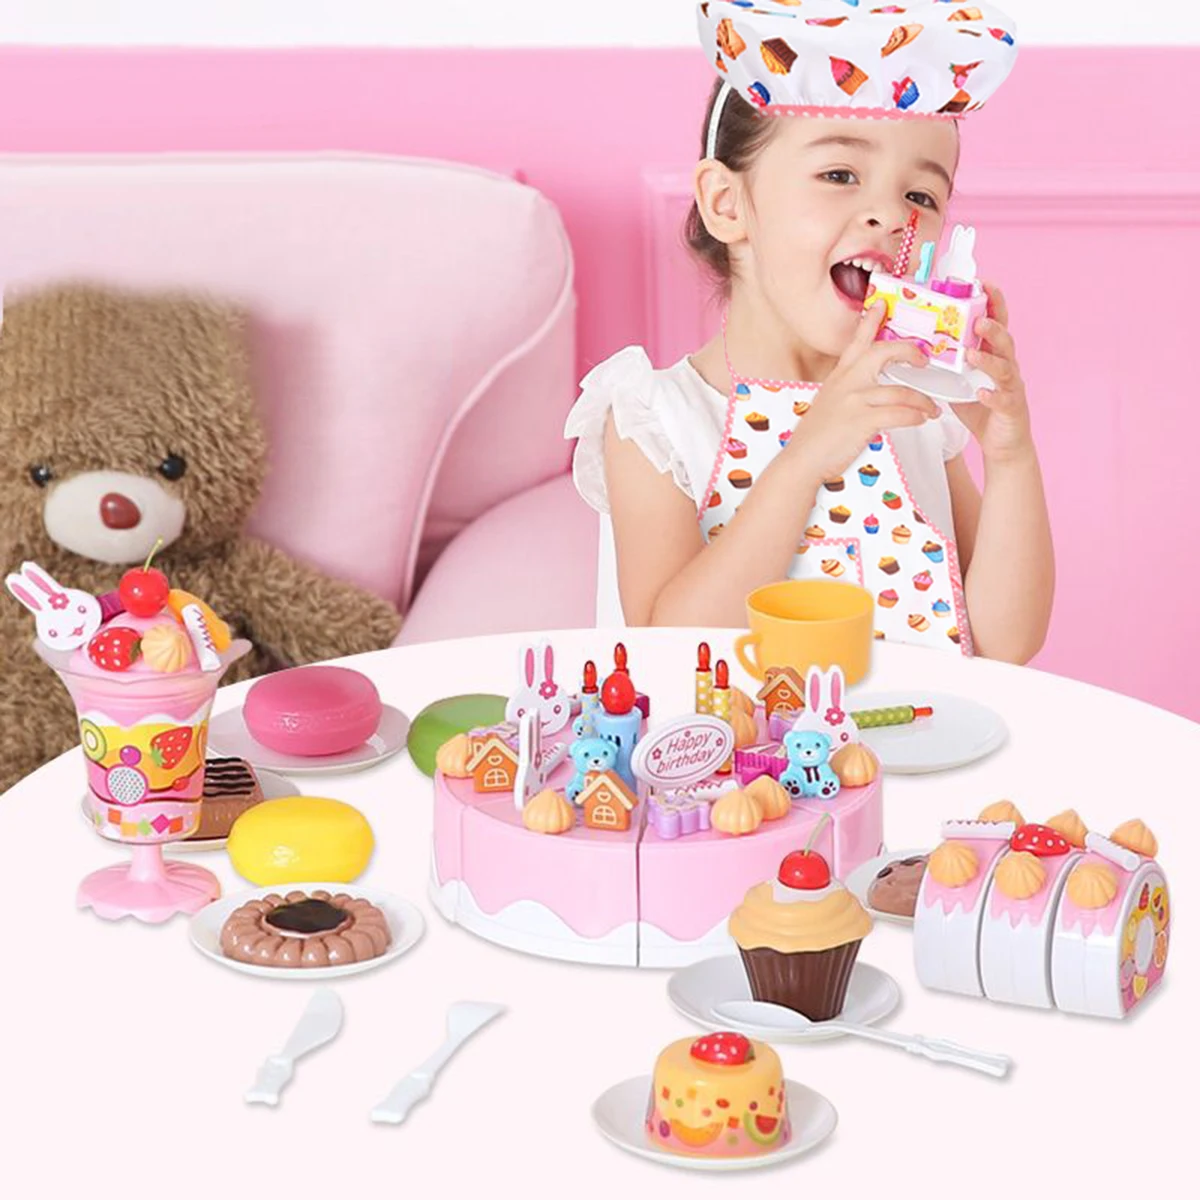 

Toy Cake Bake Set Hat + Apron Role Play Kitchen Cooking Baking Girls Toy Cooker Play Set Children Kids Cooking Kitchenware